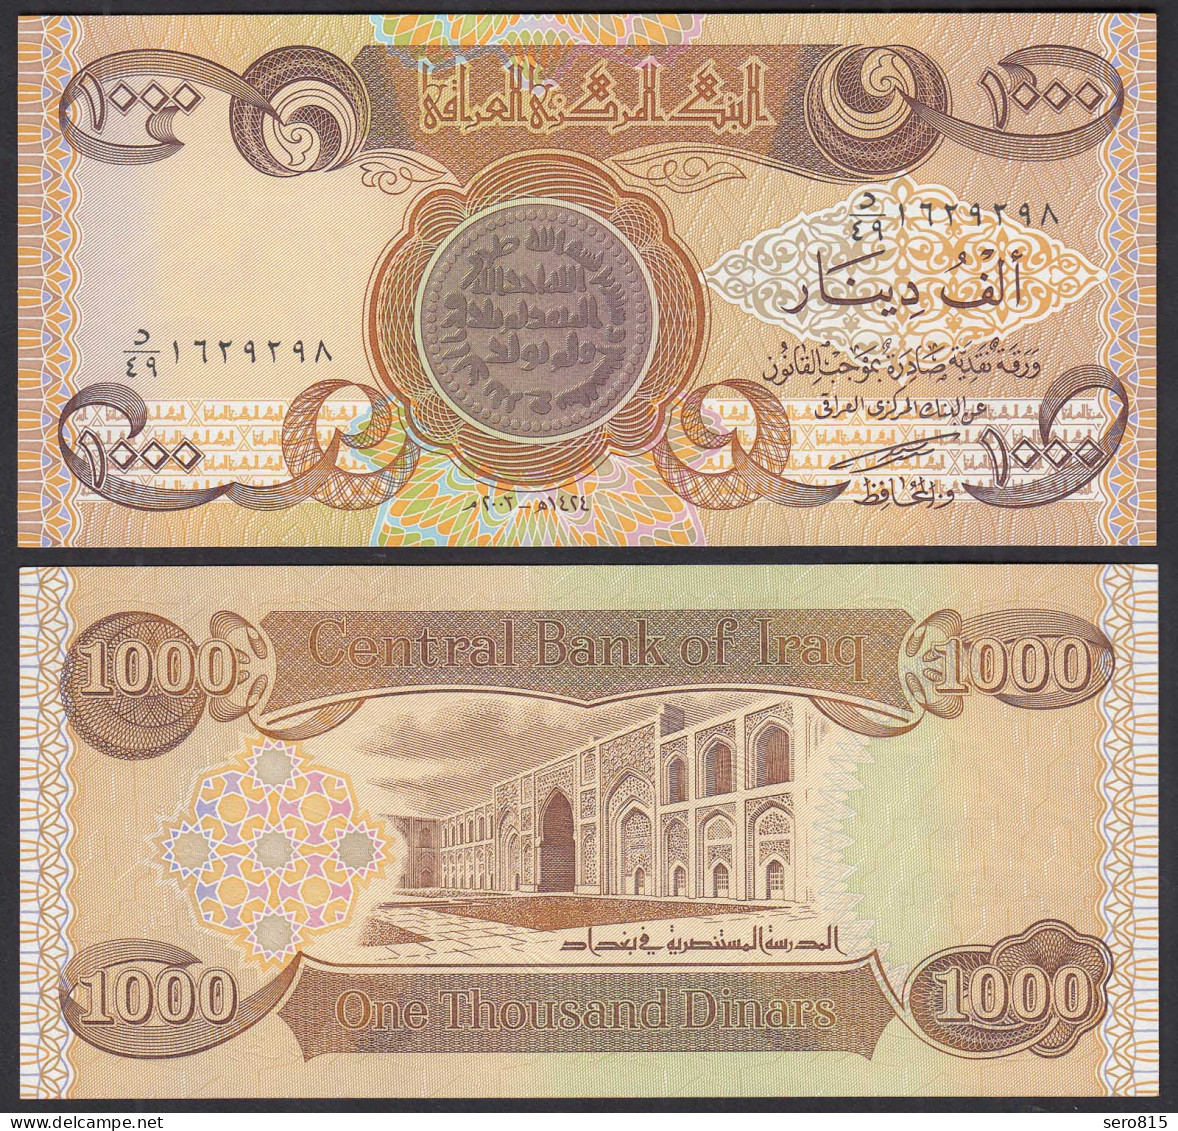 IRAK - IRAQ 1000 Dinars Banknote 2003 Pick 93a UNC (1)   (31988 - Other - Asia